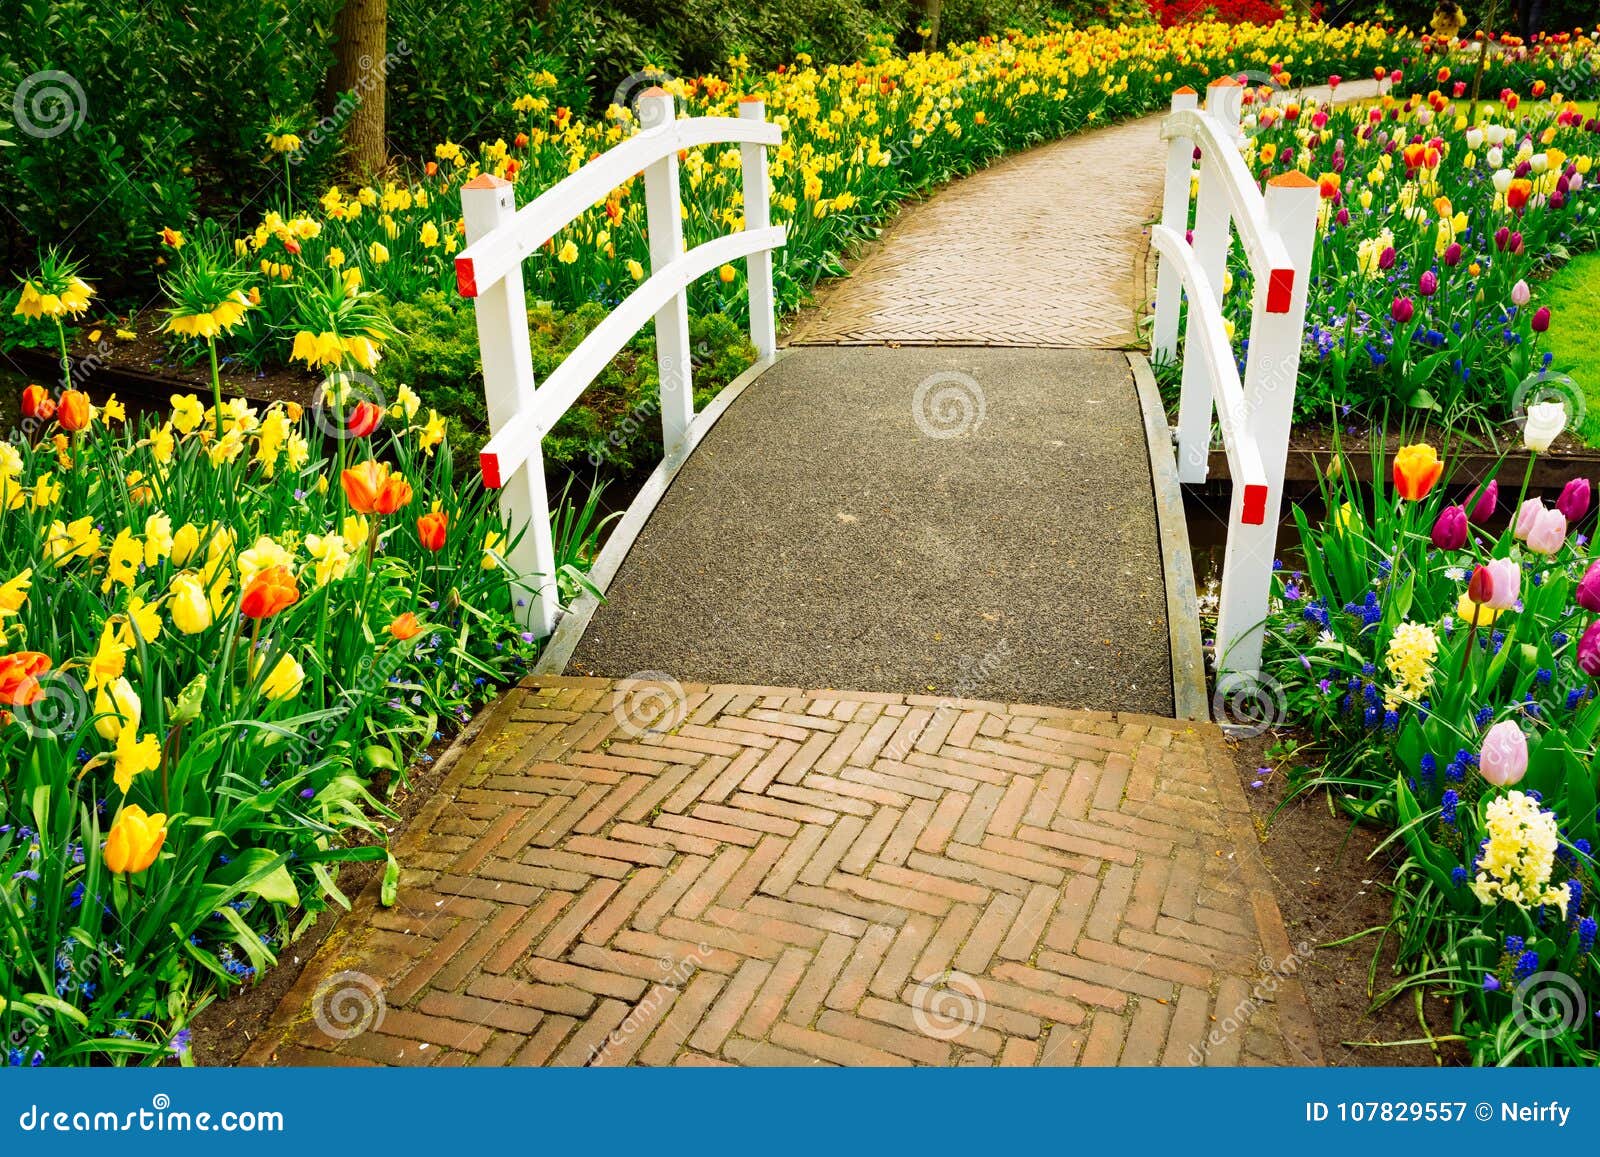 stone walk way in garden stock image. image of flower - 107829557